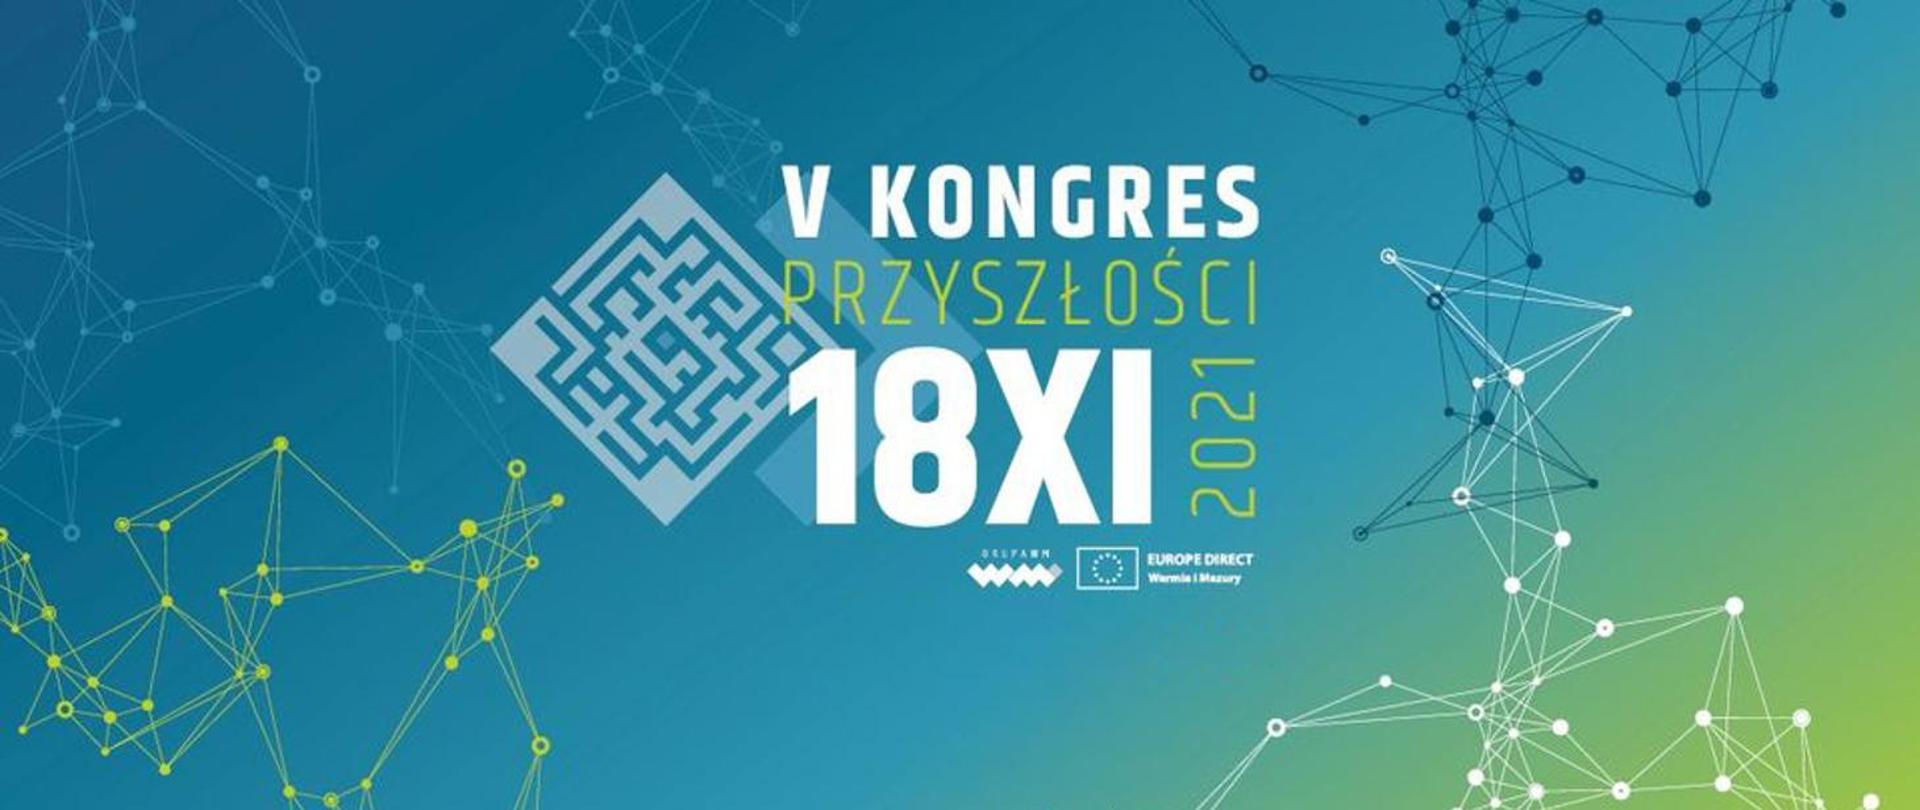 5th Congress of the Future - 18.11.2021